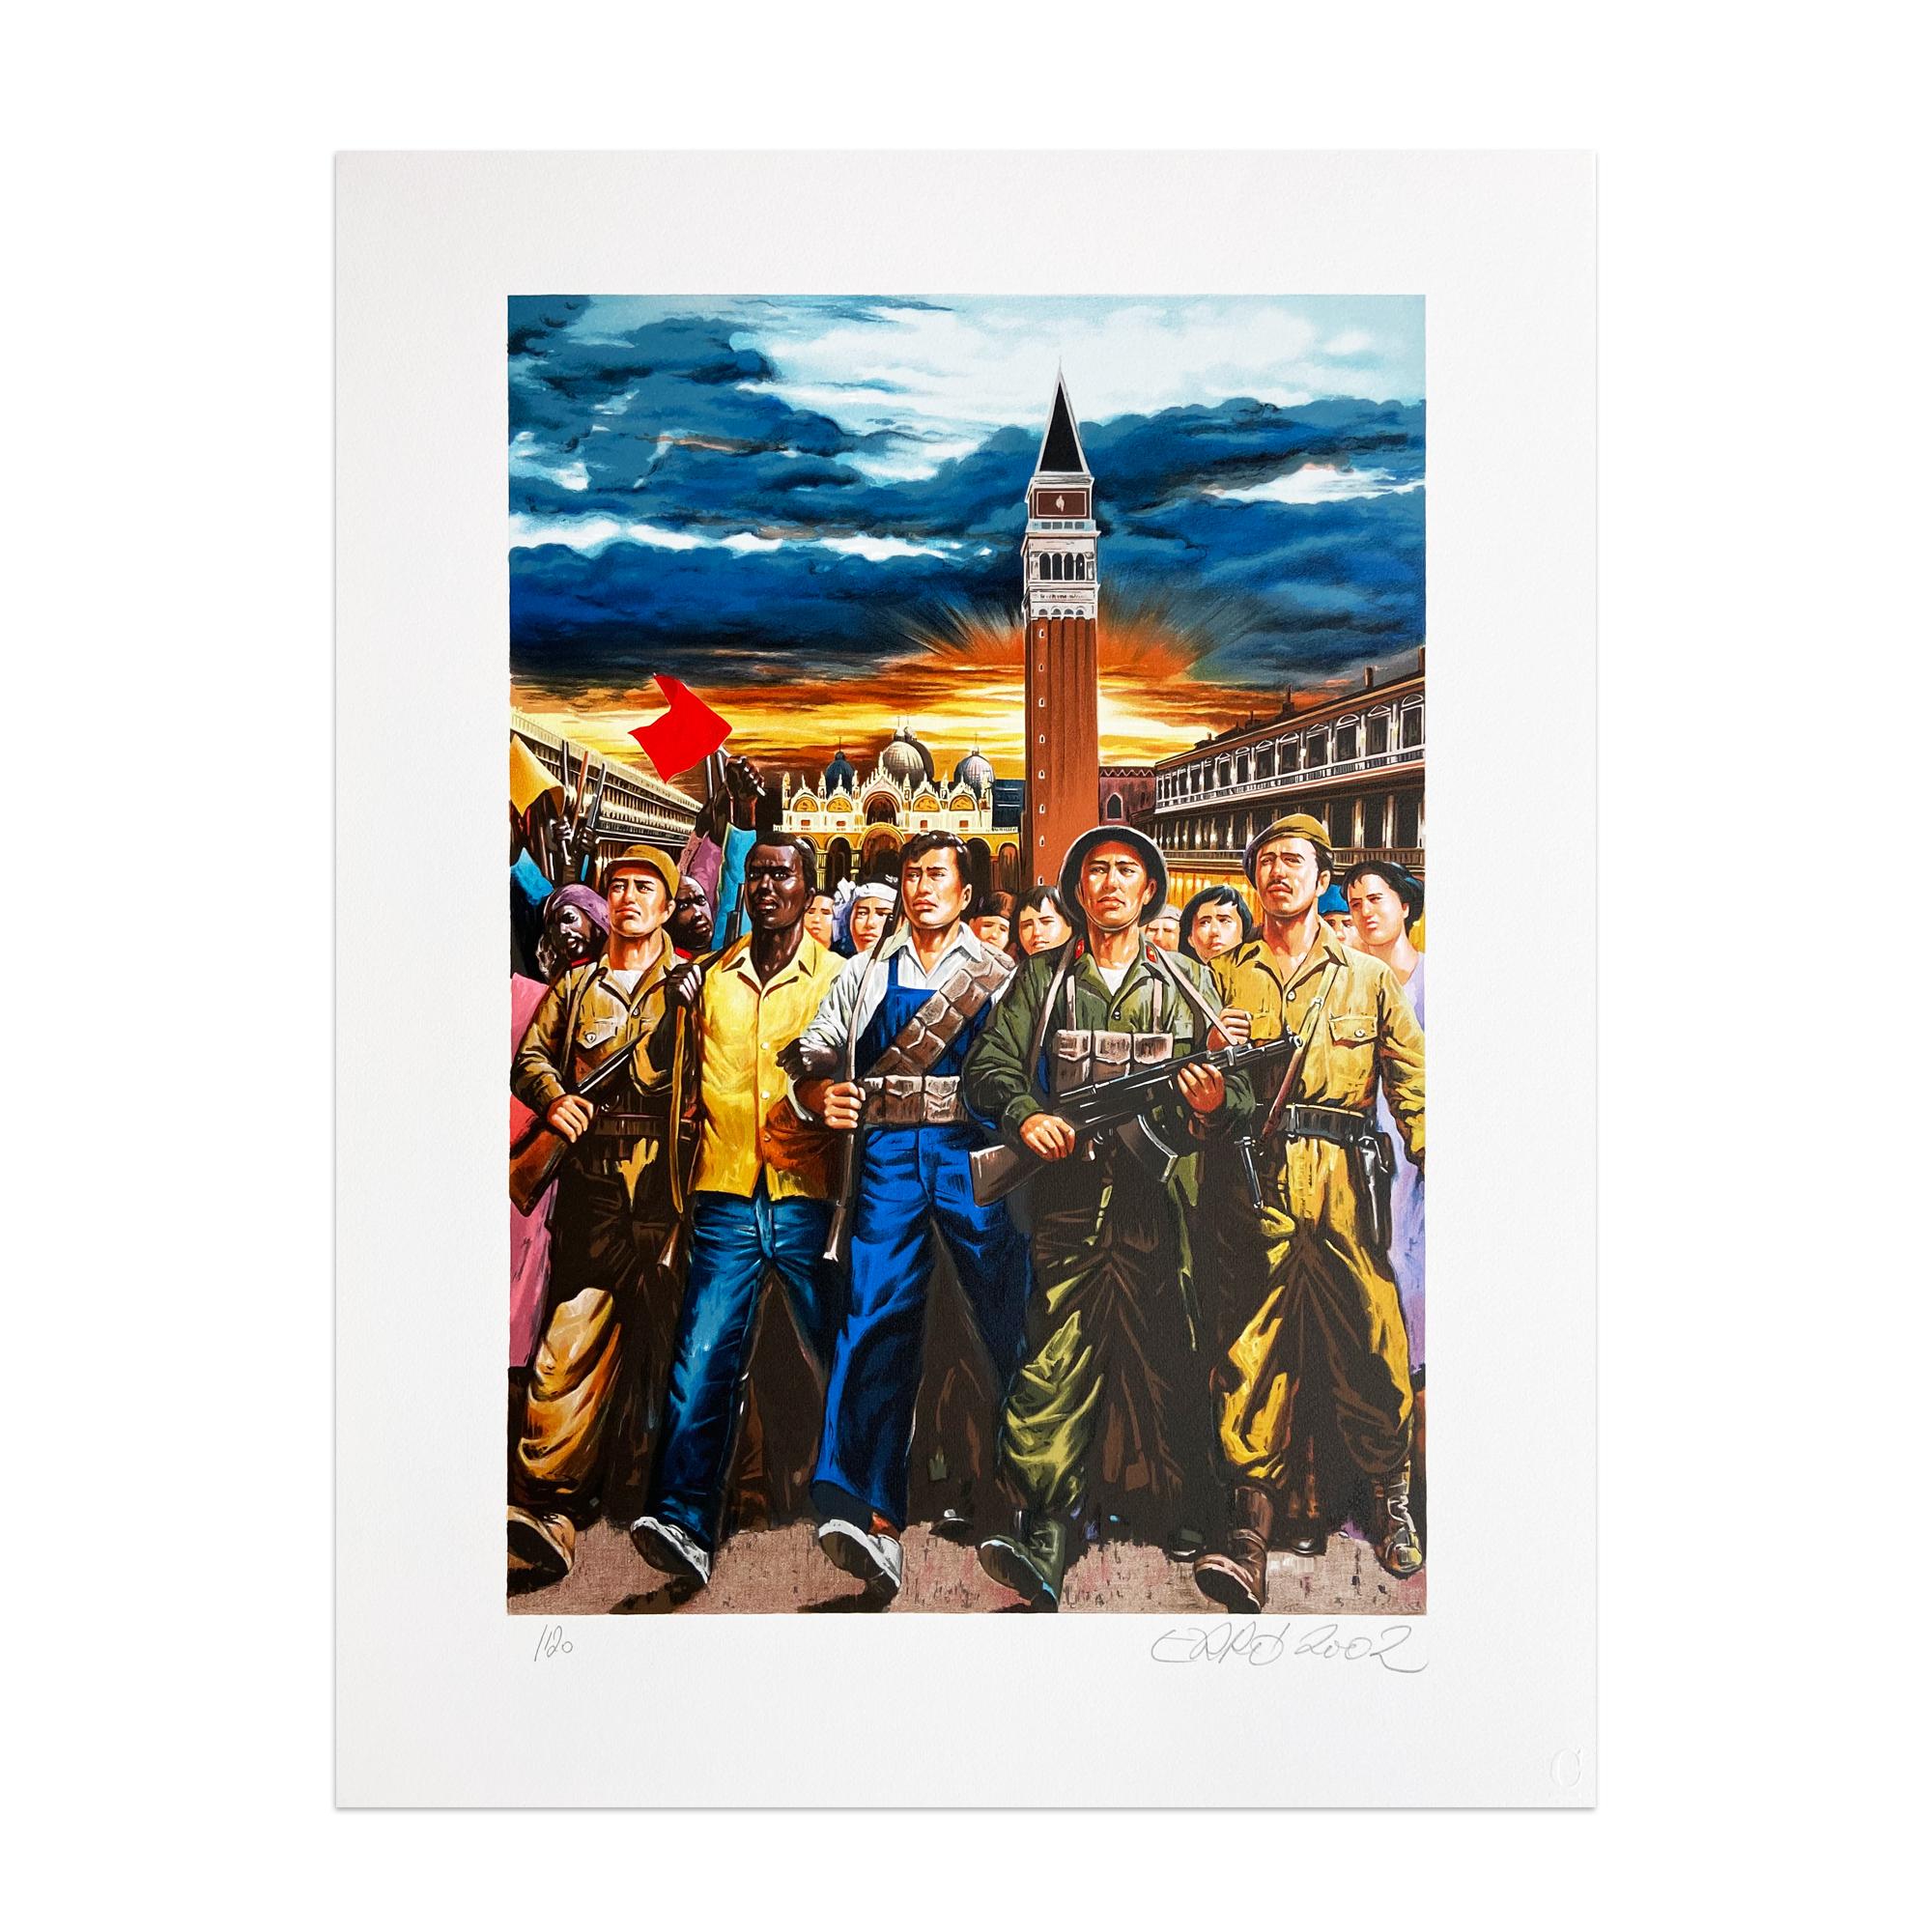 Erró, L'ultima visita di Mao a Venezia - Portfolio mit 12 signierten Drucken, Pop Art 5